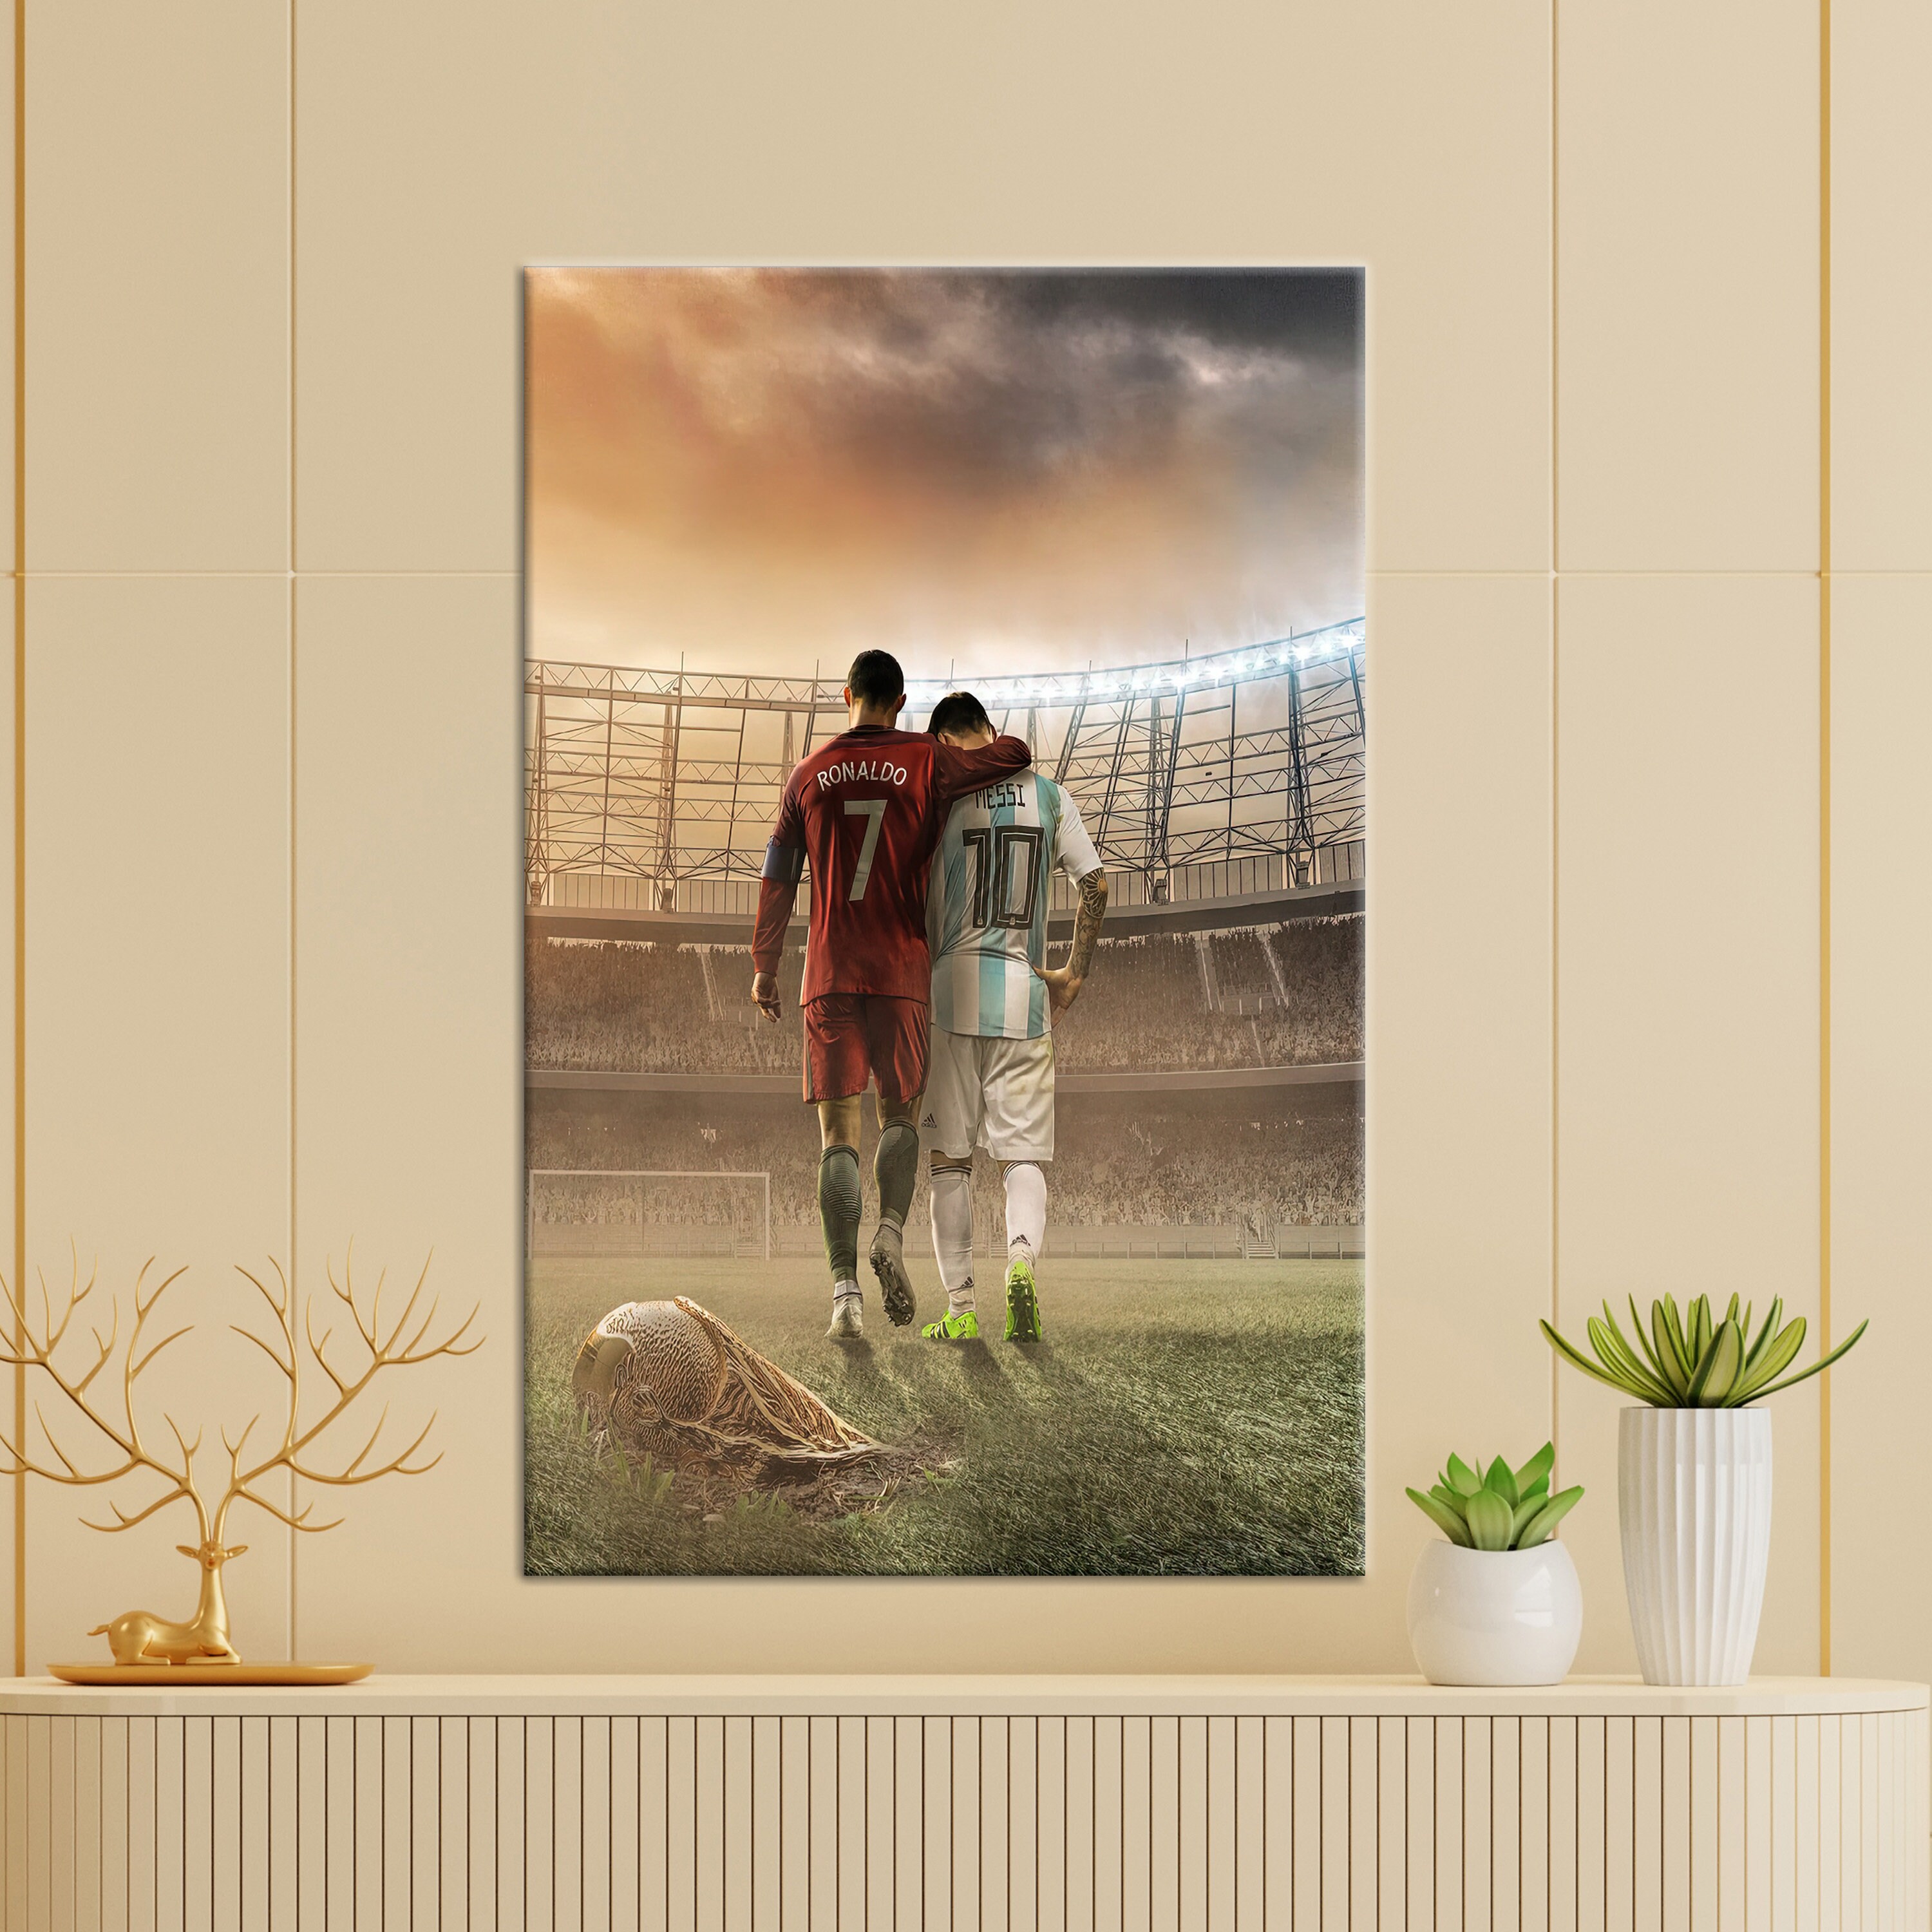  QEWRT Messi, Ronaldo Poster Soccer Picture Canvas